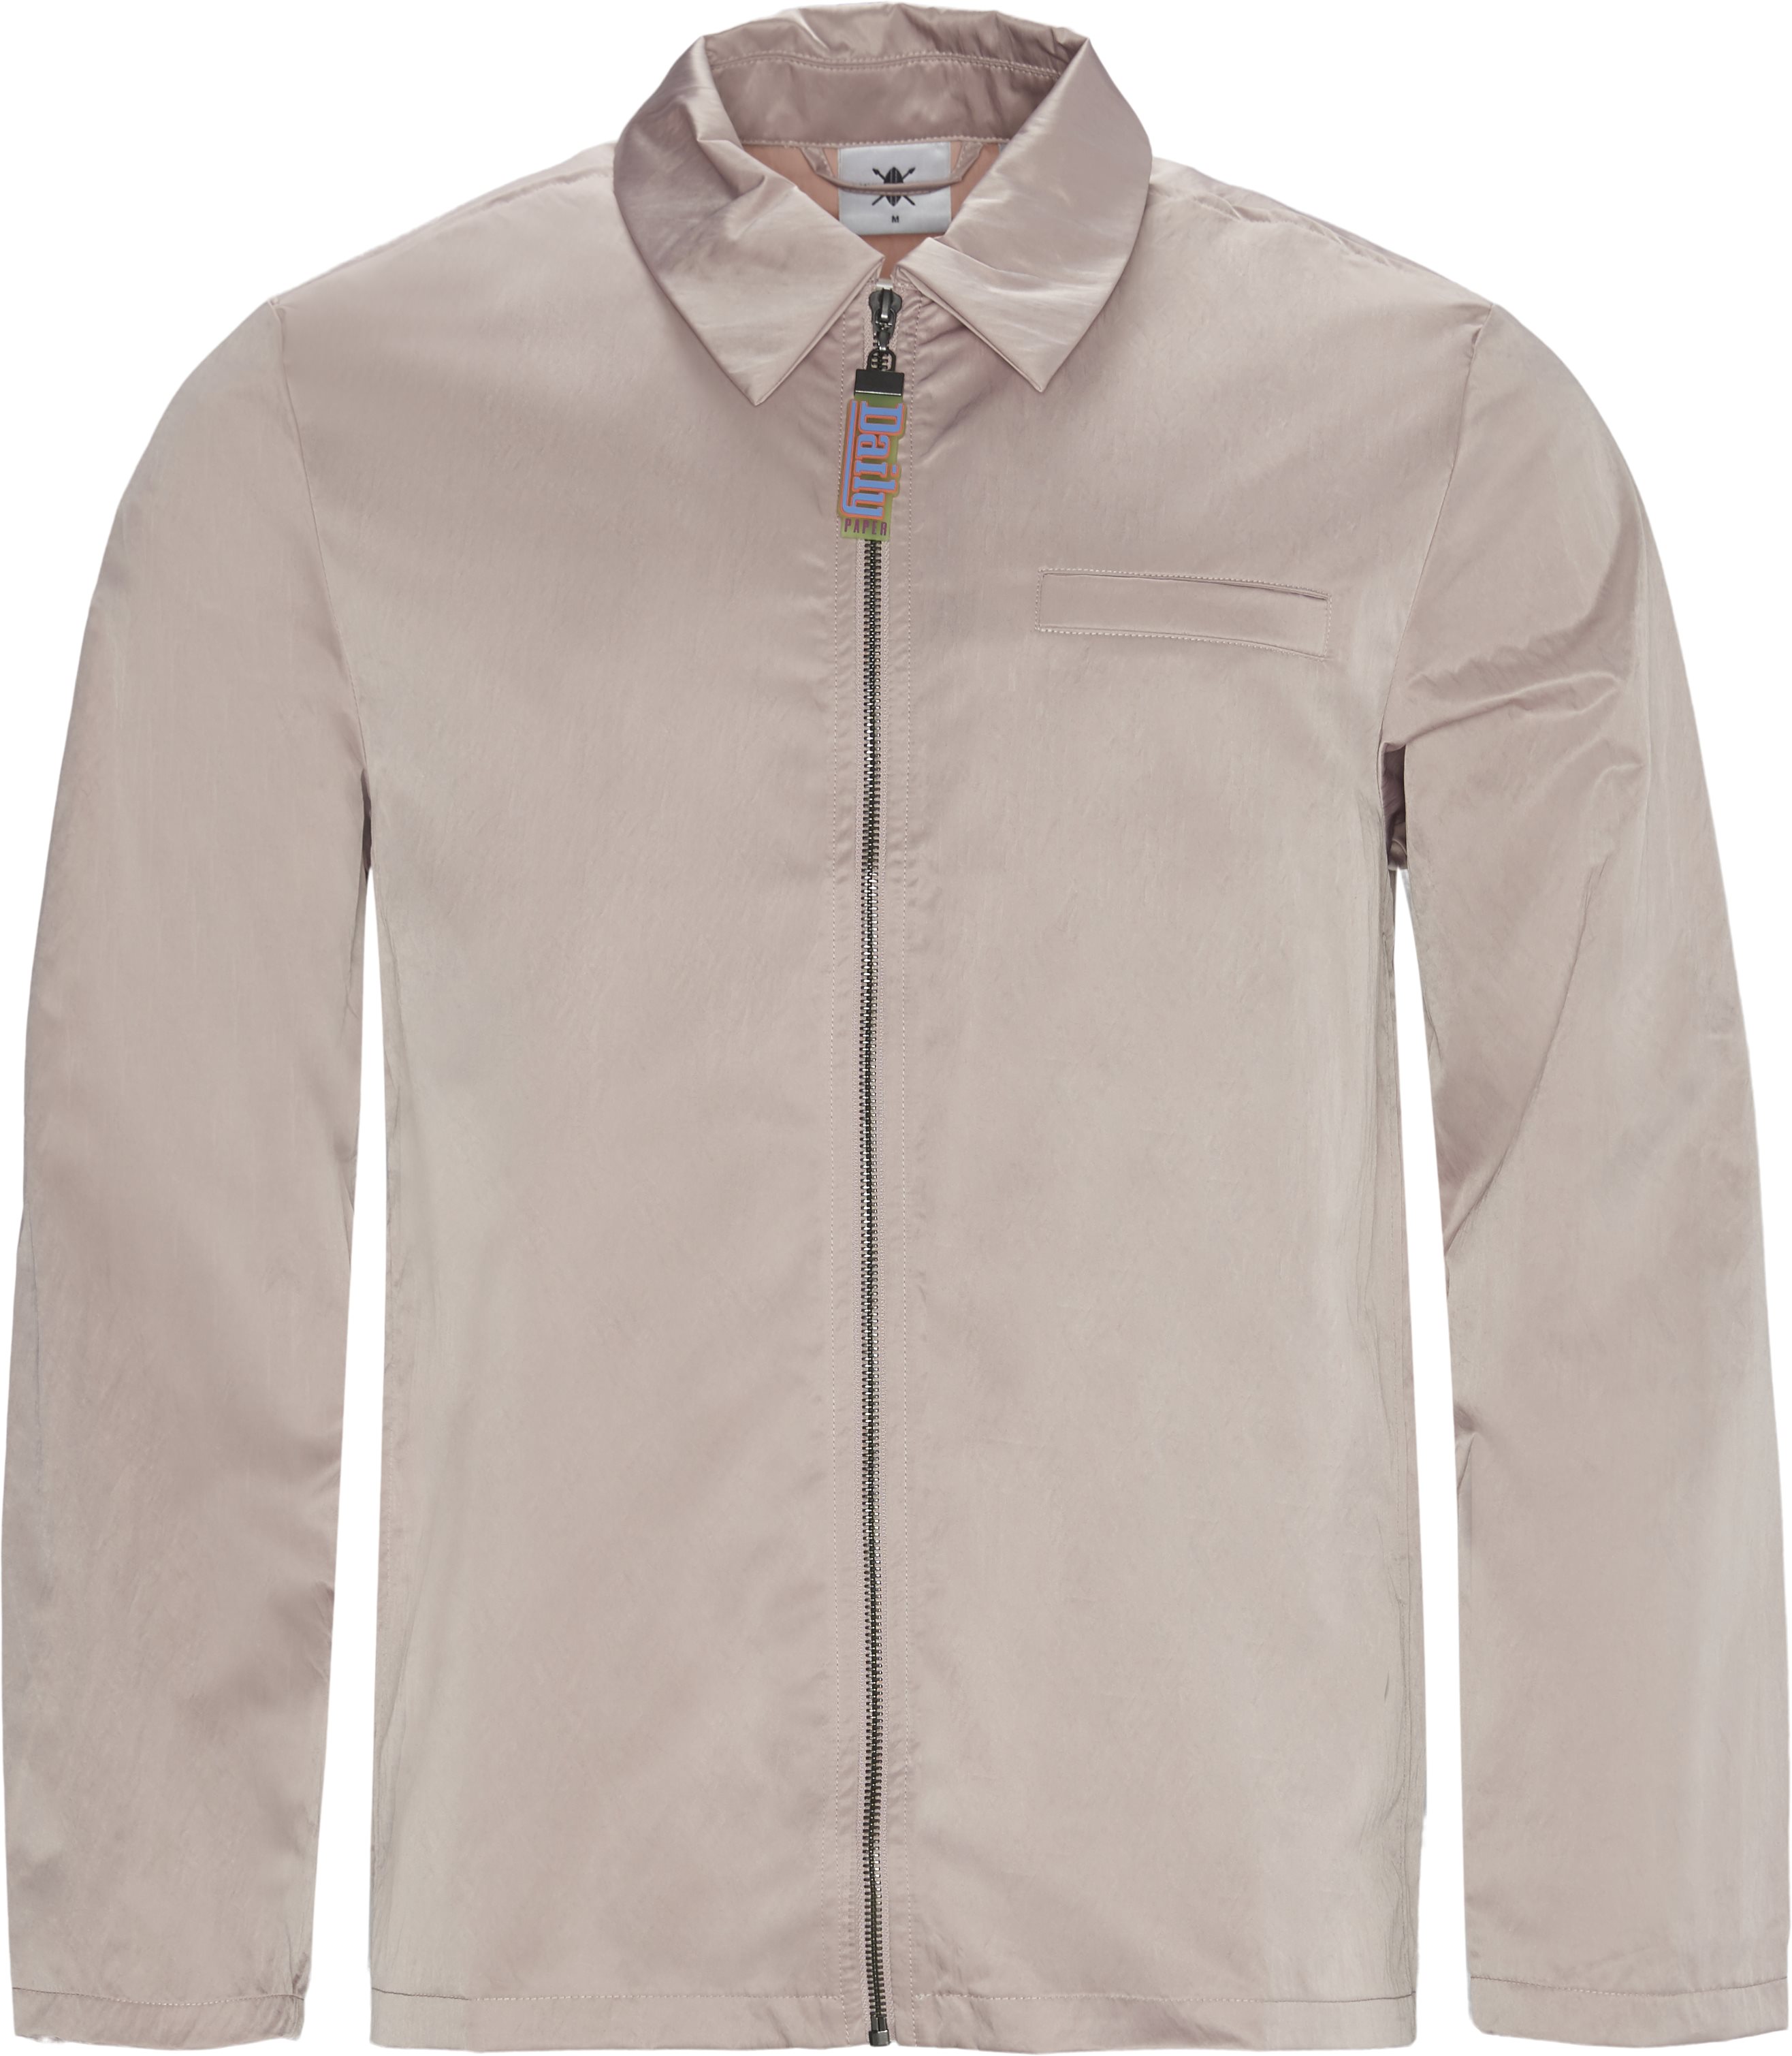 Hama Jacket - Lightweight jackets - Regular fit - Pink